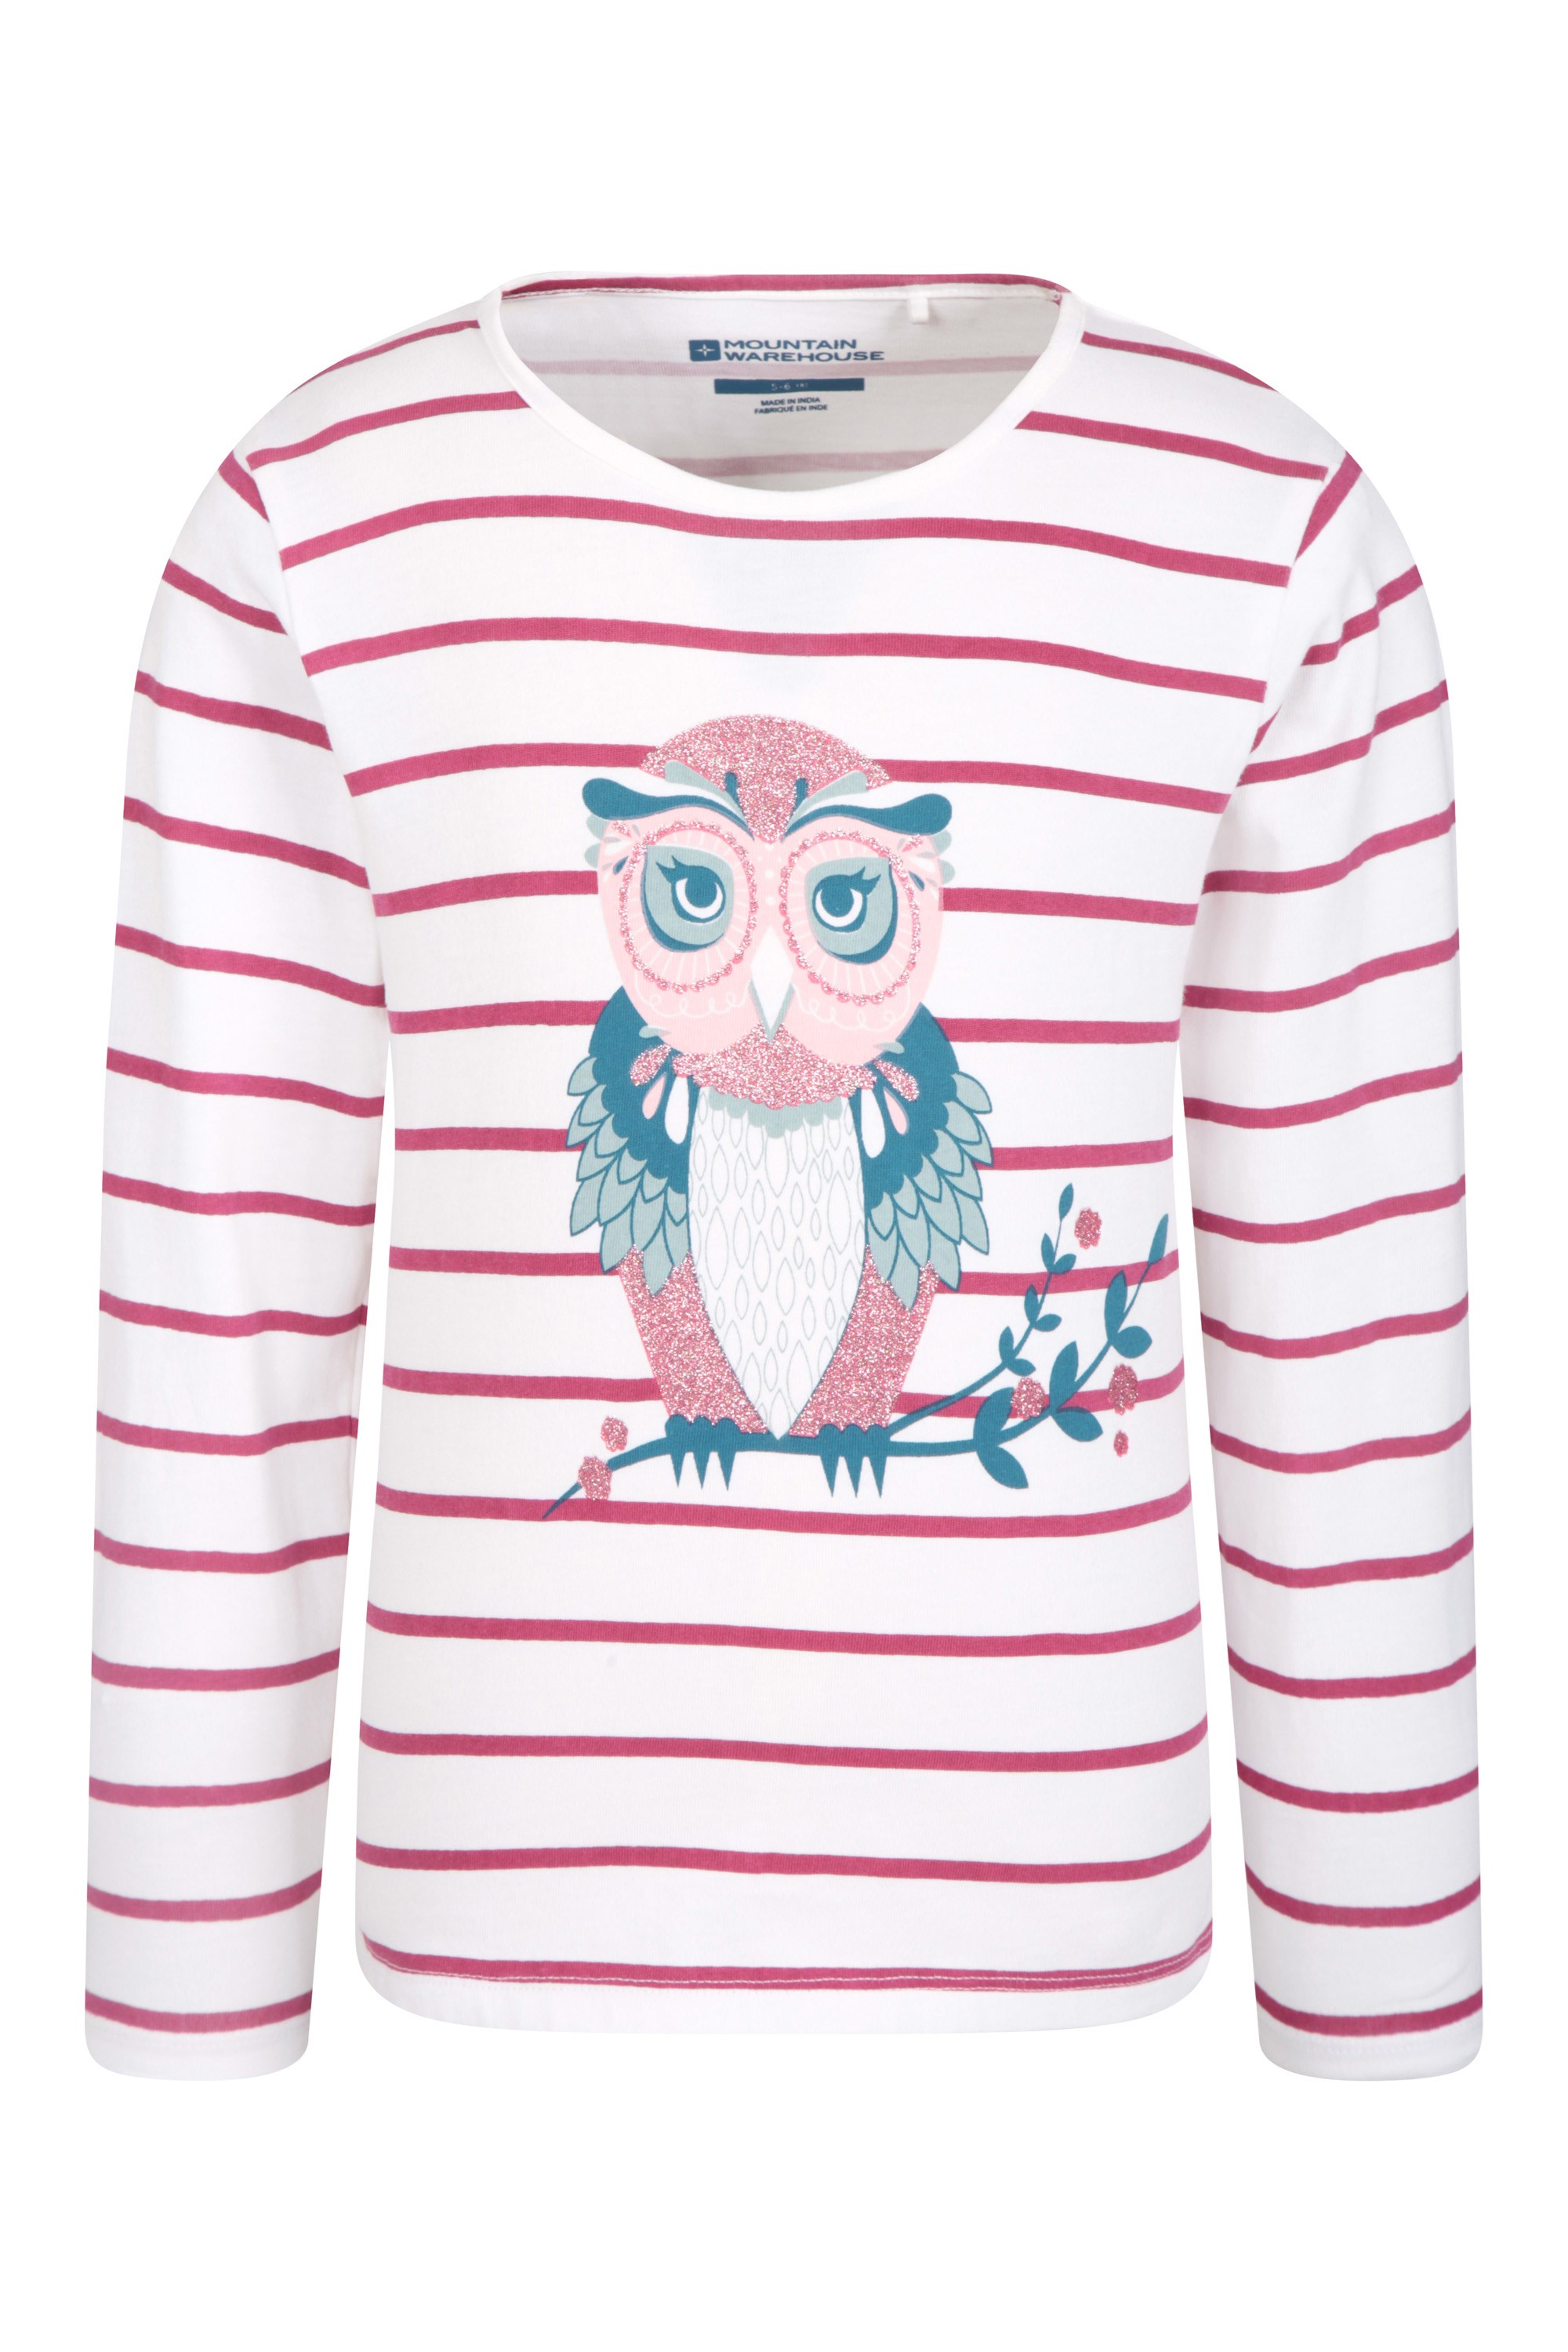 Owl Sparkle Striped Kids T-shirt - Pink